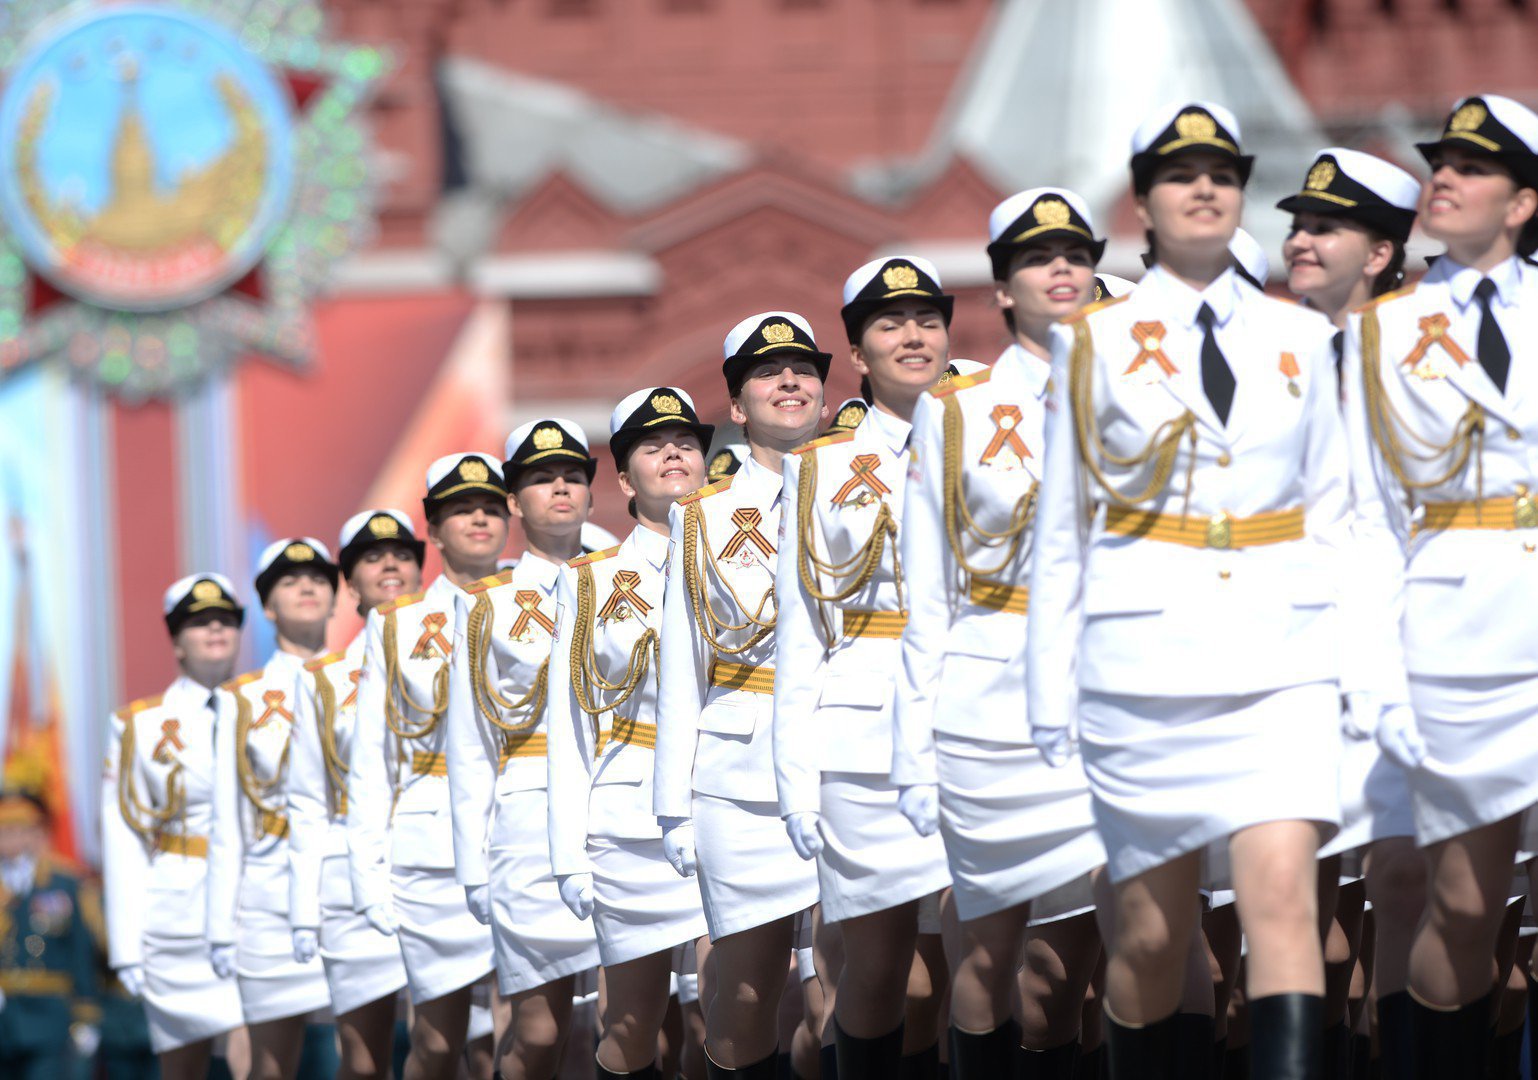 Красная парадная форма. Девушки военные на параде.